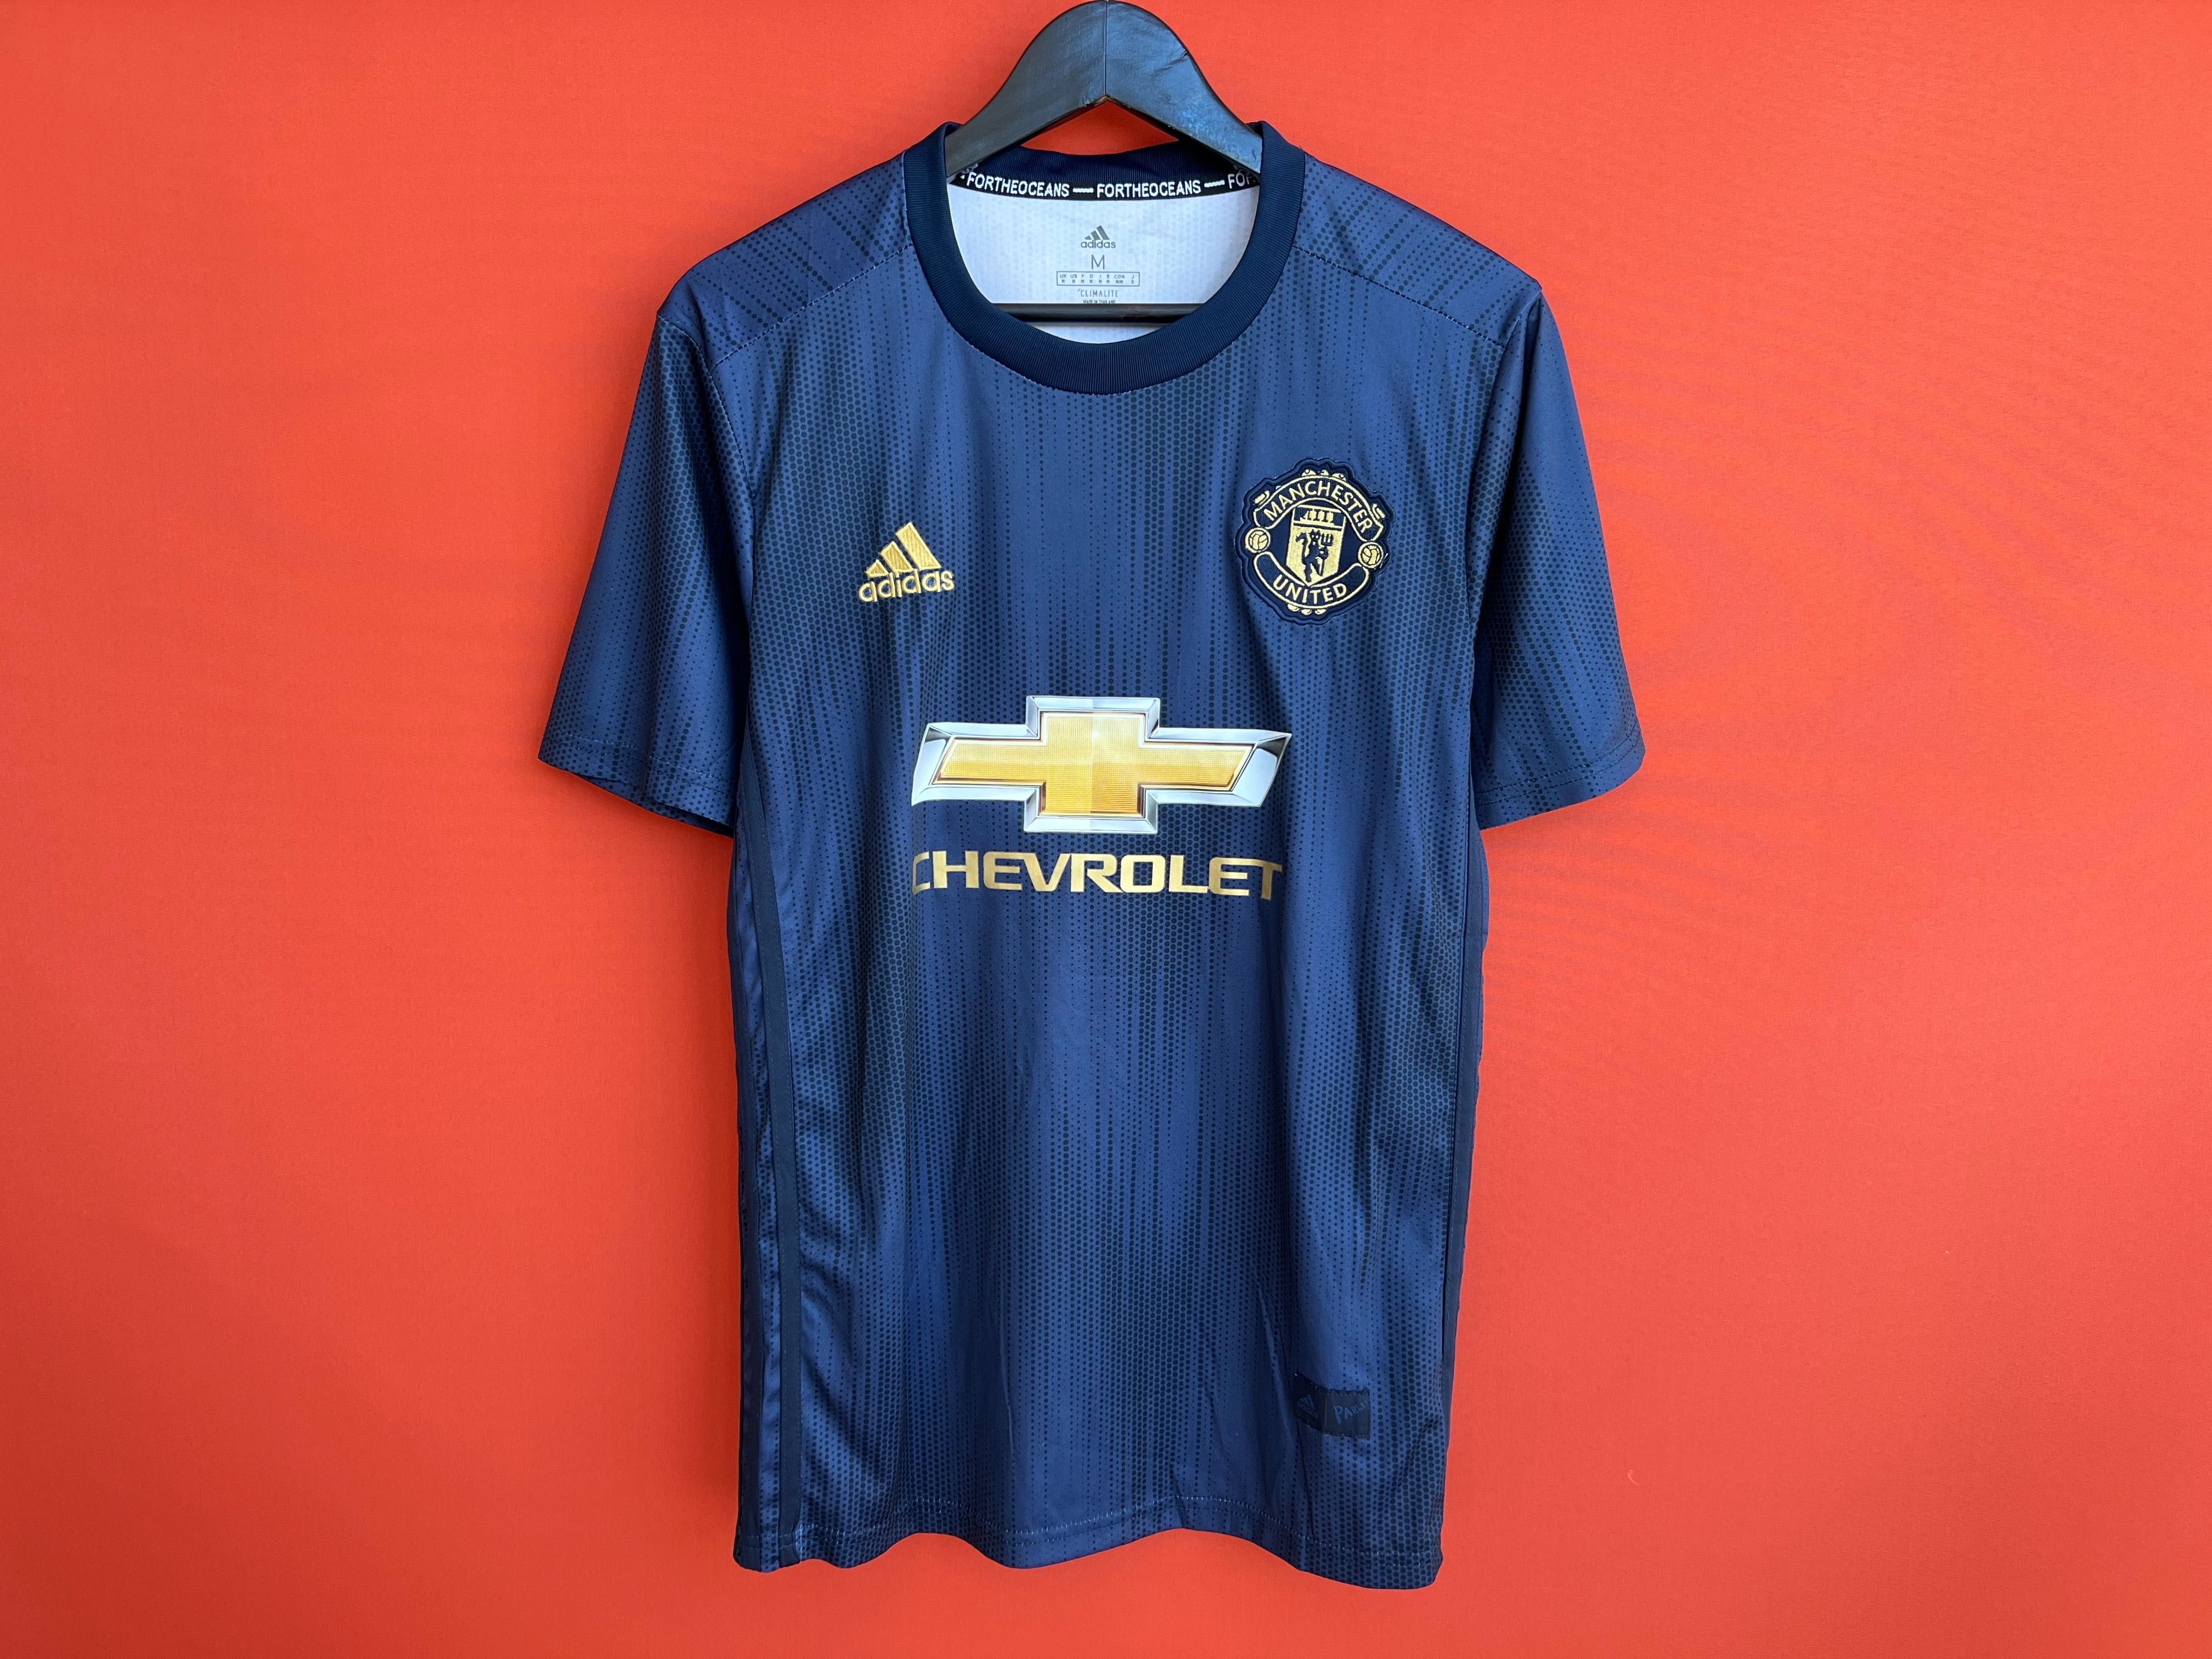 Adidas Manchester United Lukaku футболка футбольная форма размер M